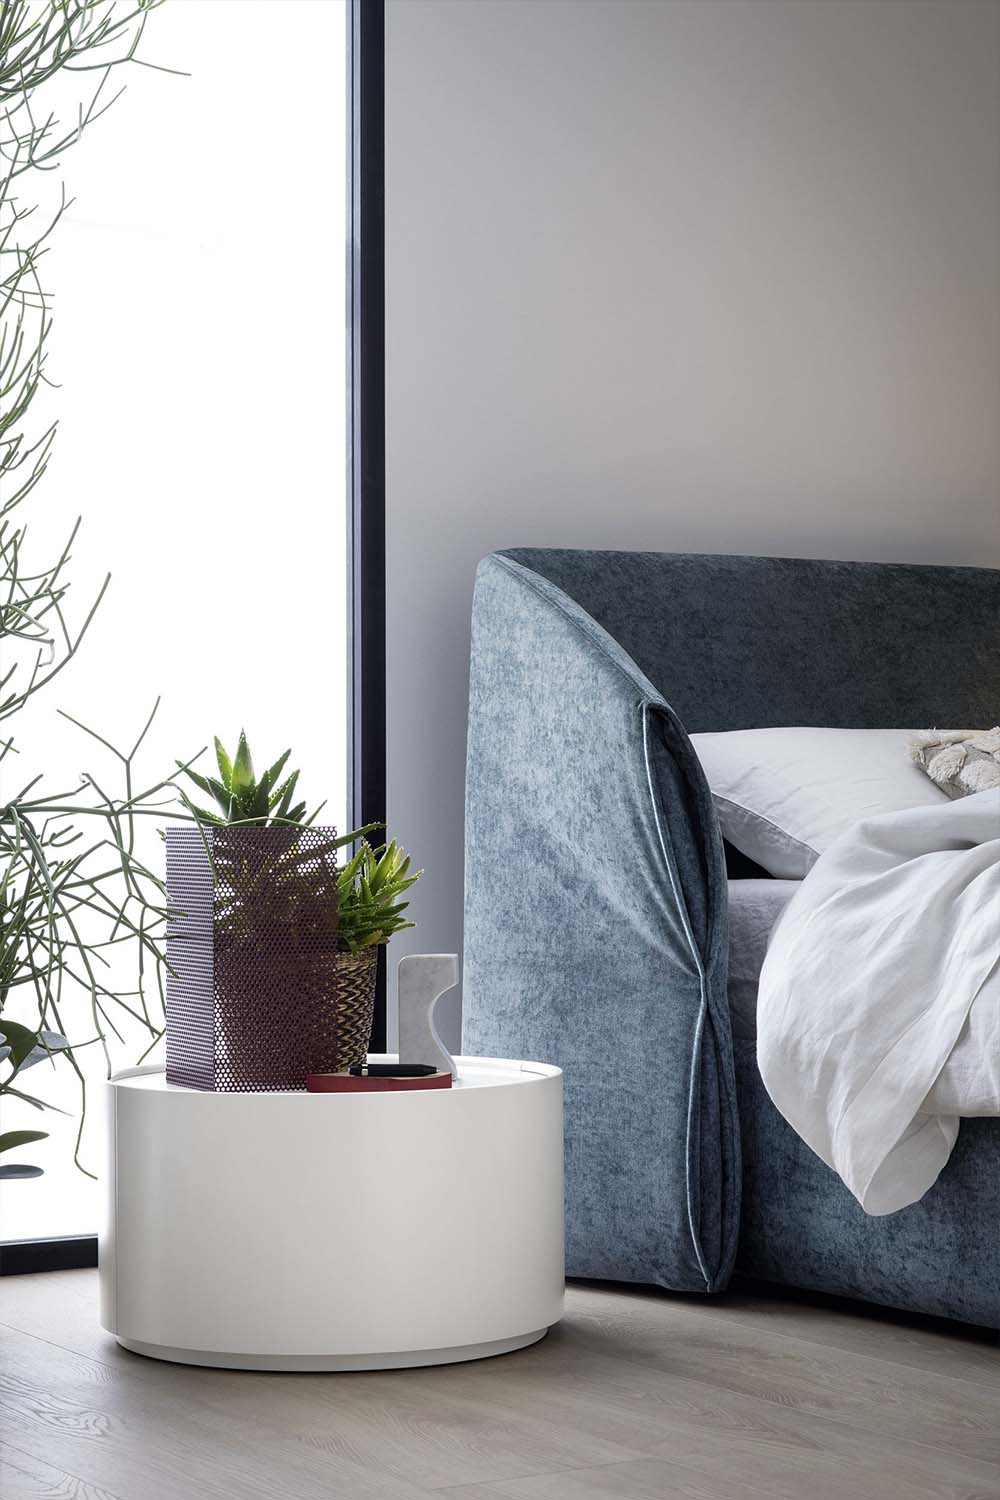 Hide luxury, modern, contemporary Italian bed by Novamobili. Sold by Krieder UK.